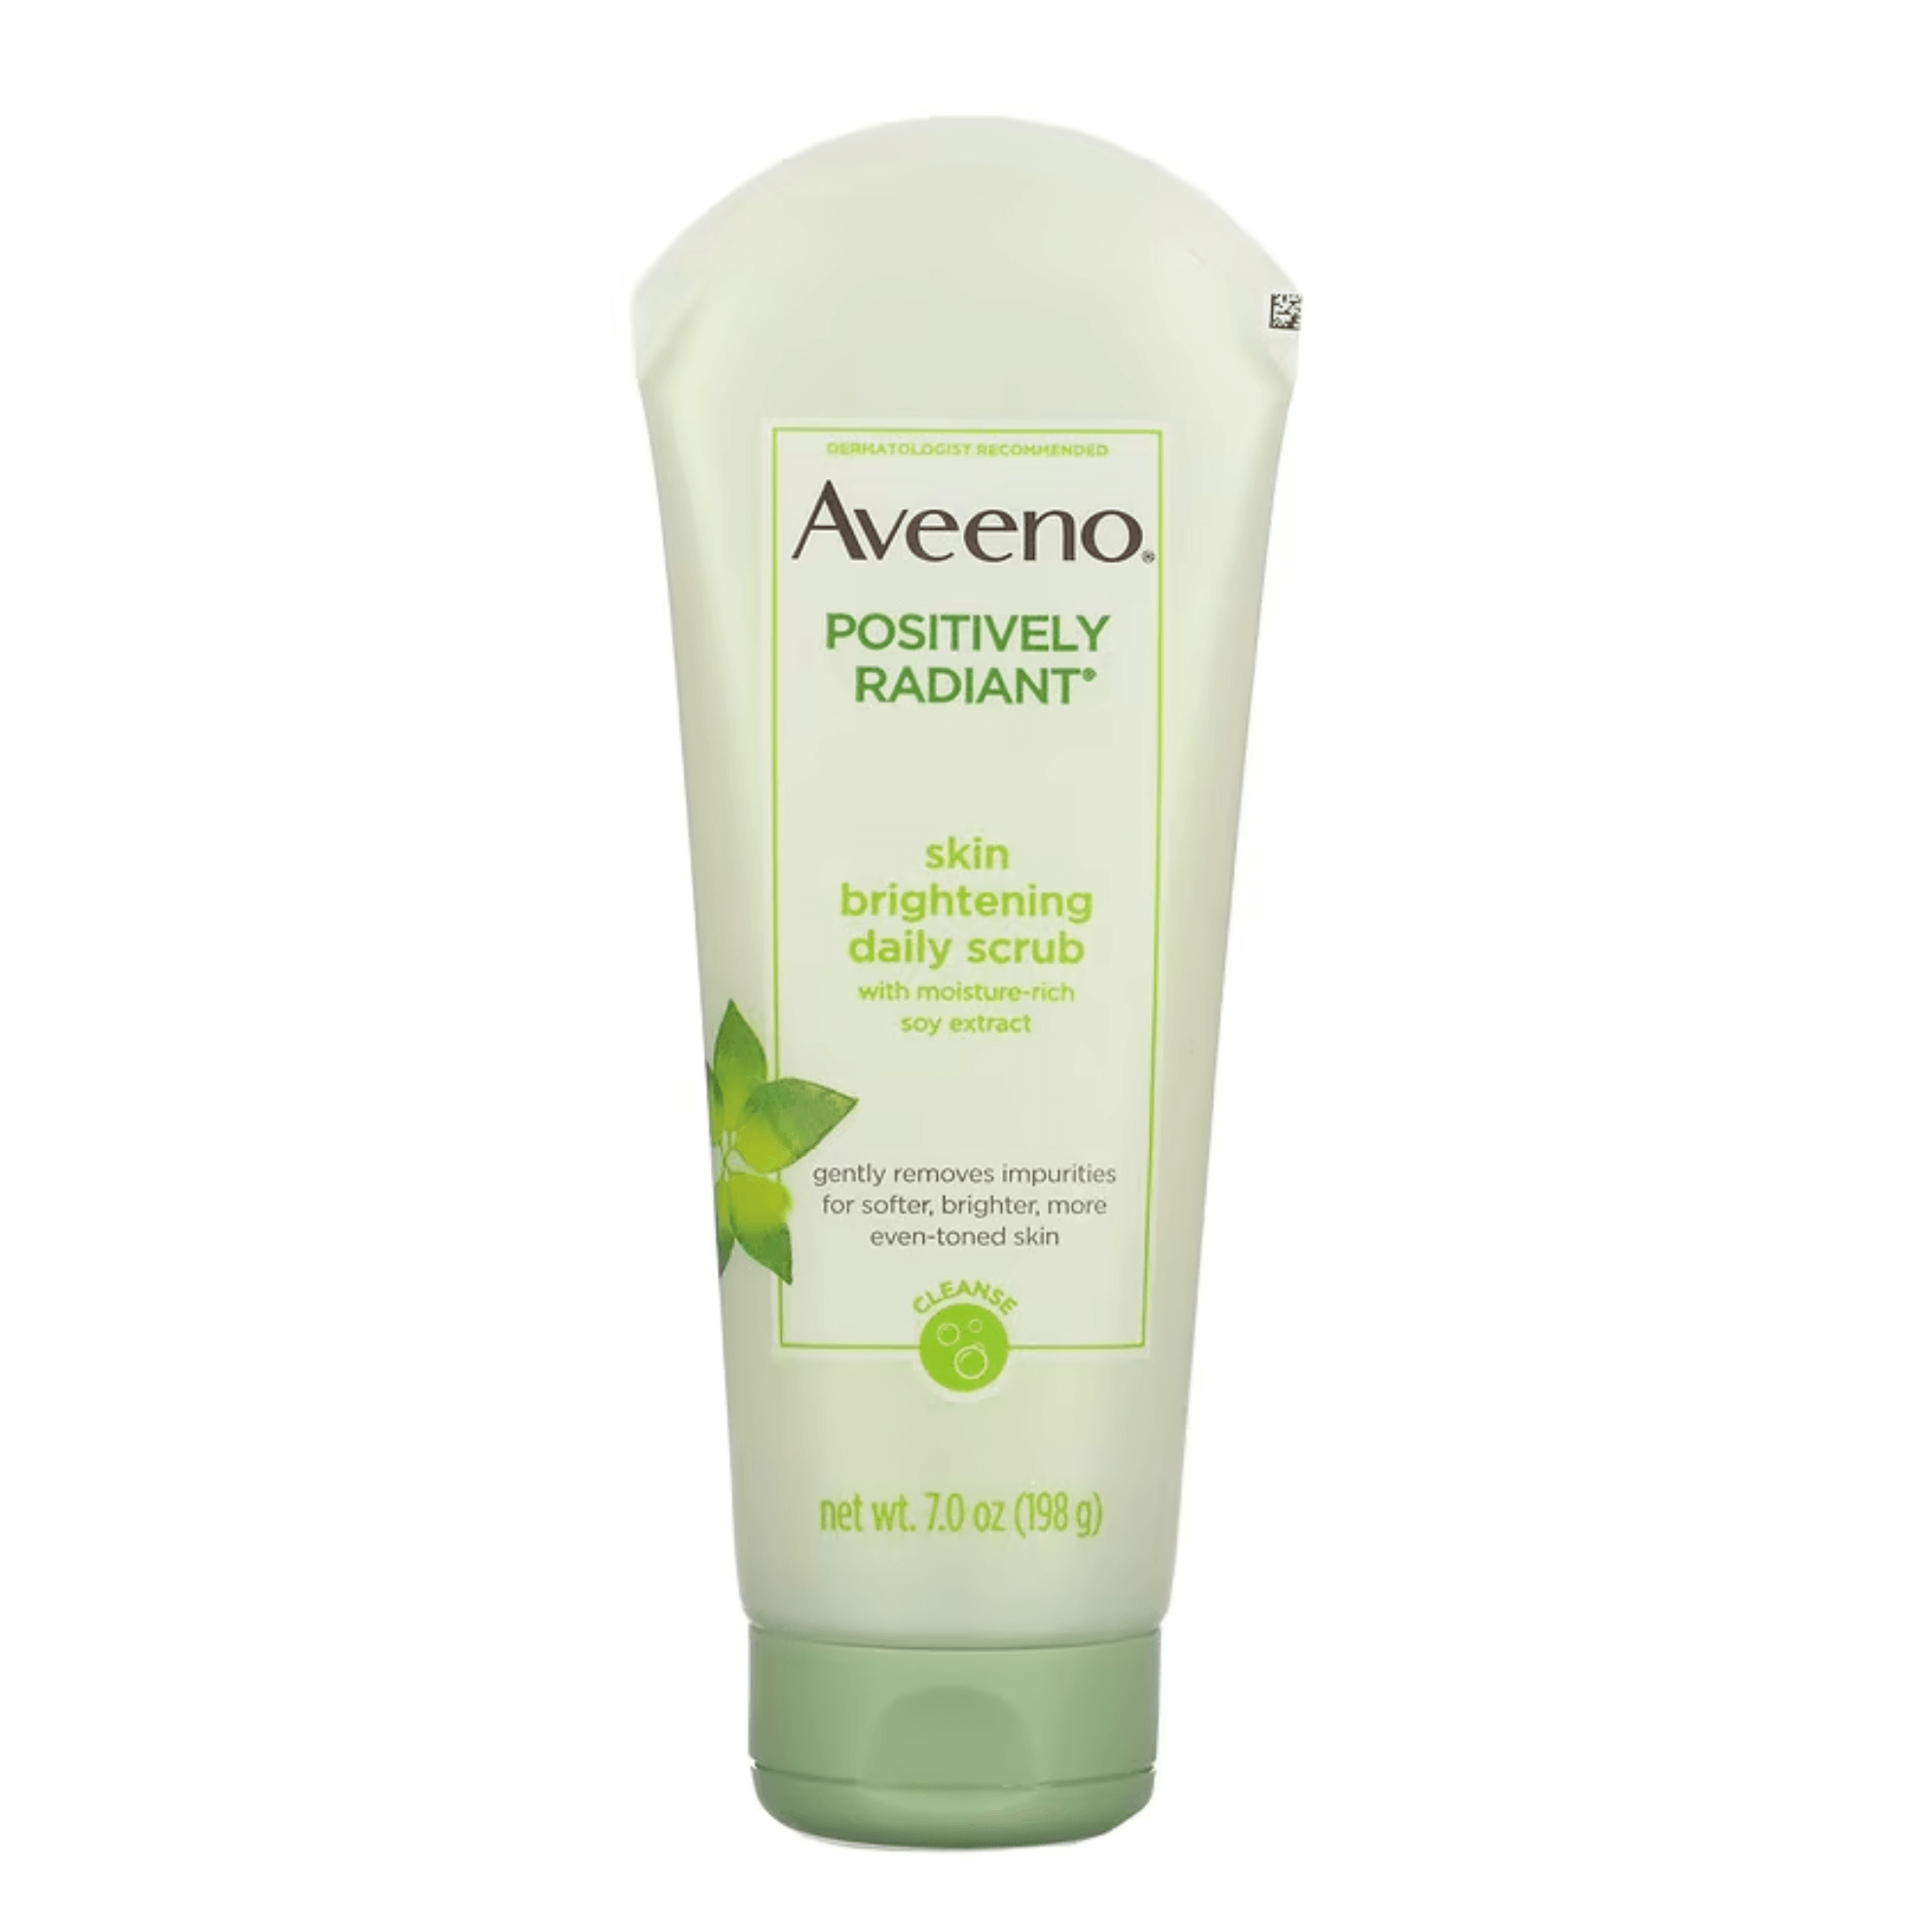 Ежедневный скраб для лица Aveeno Positively Radiant, 198 г aveeno active naturals positively radiant осветляющий скраб для ежедневного применения 56 7 г 2 0 унции